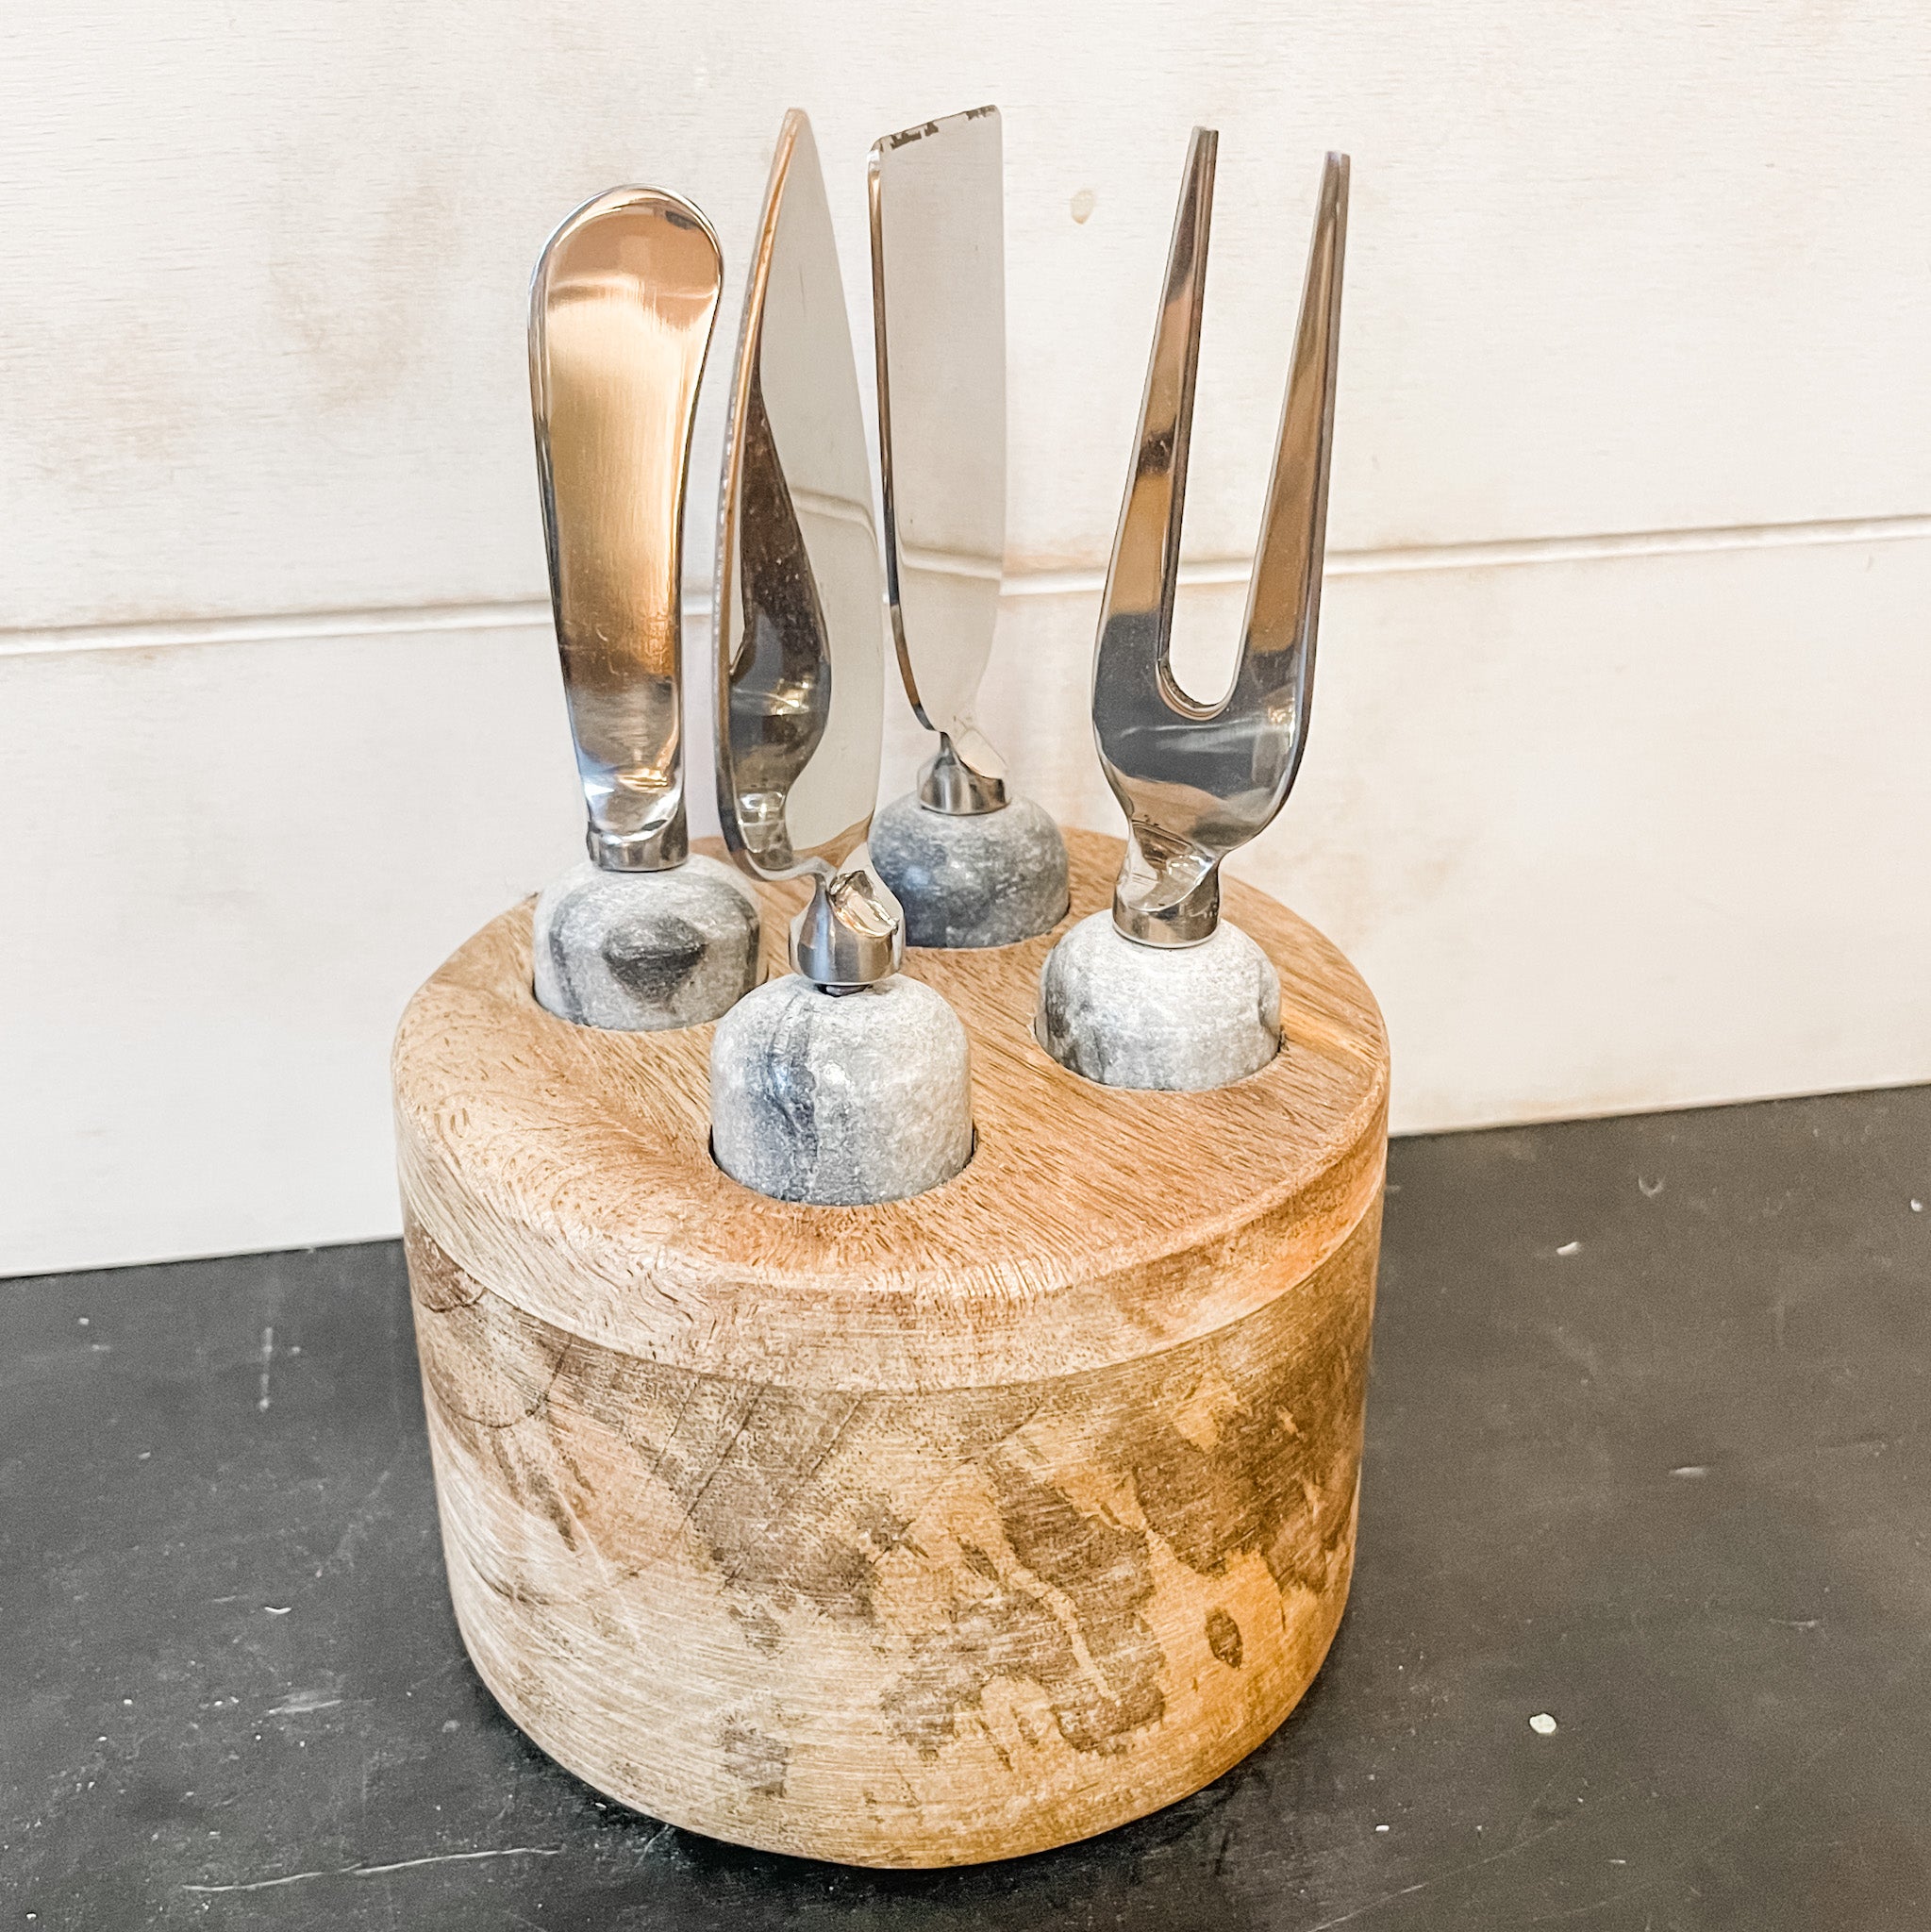 Steel Cheese/Knife Set